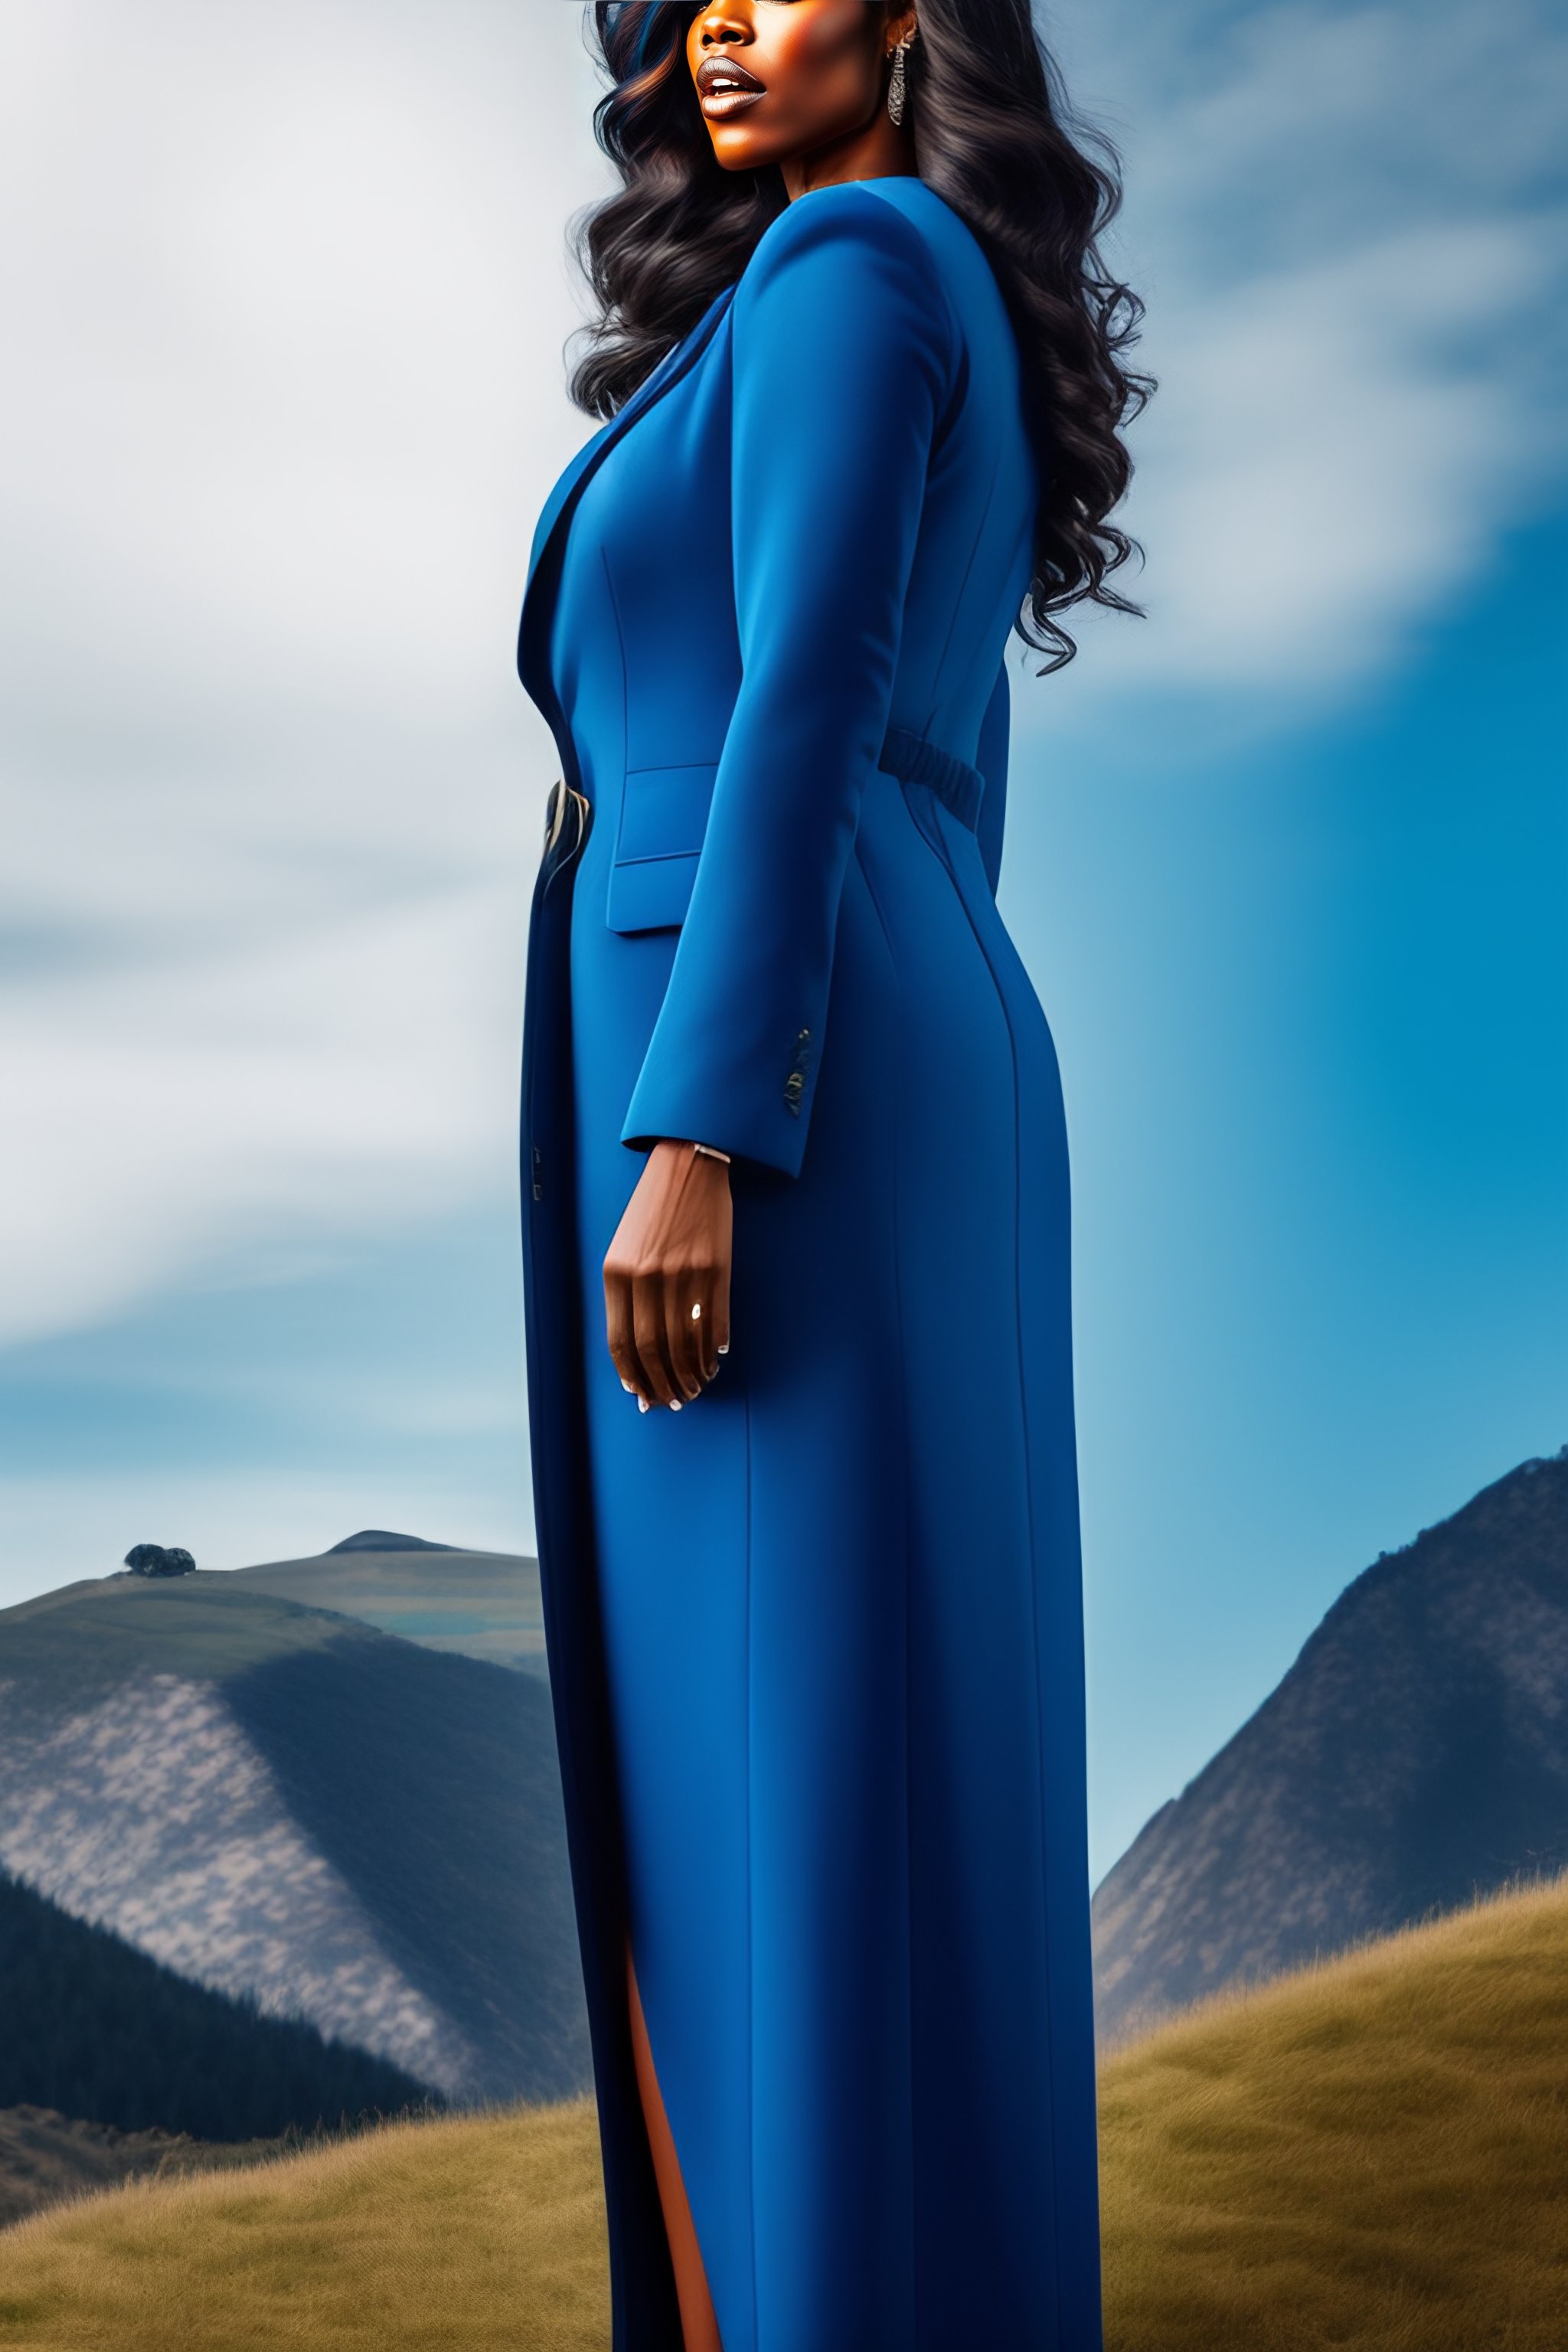 Lexica - Tall woman in blue